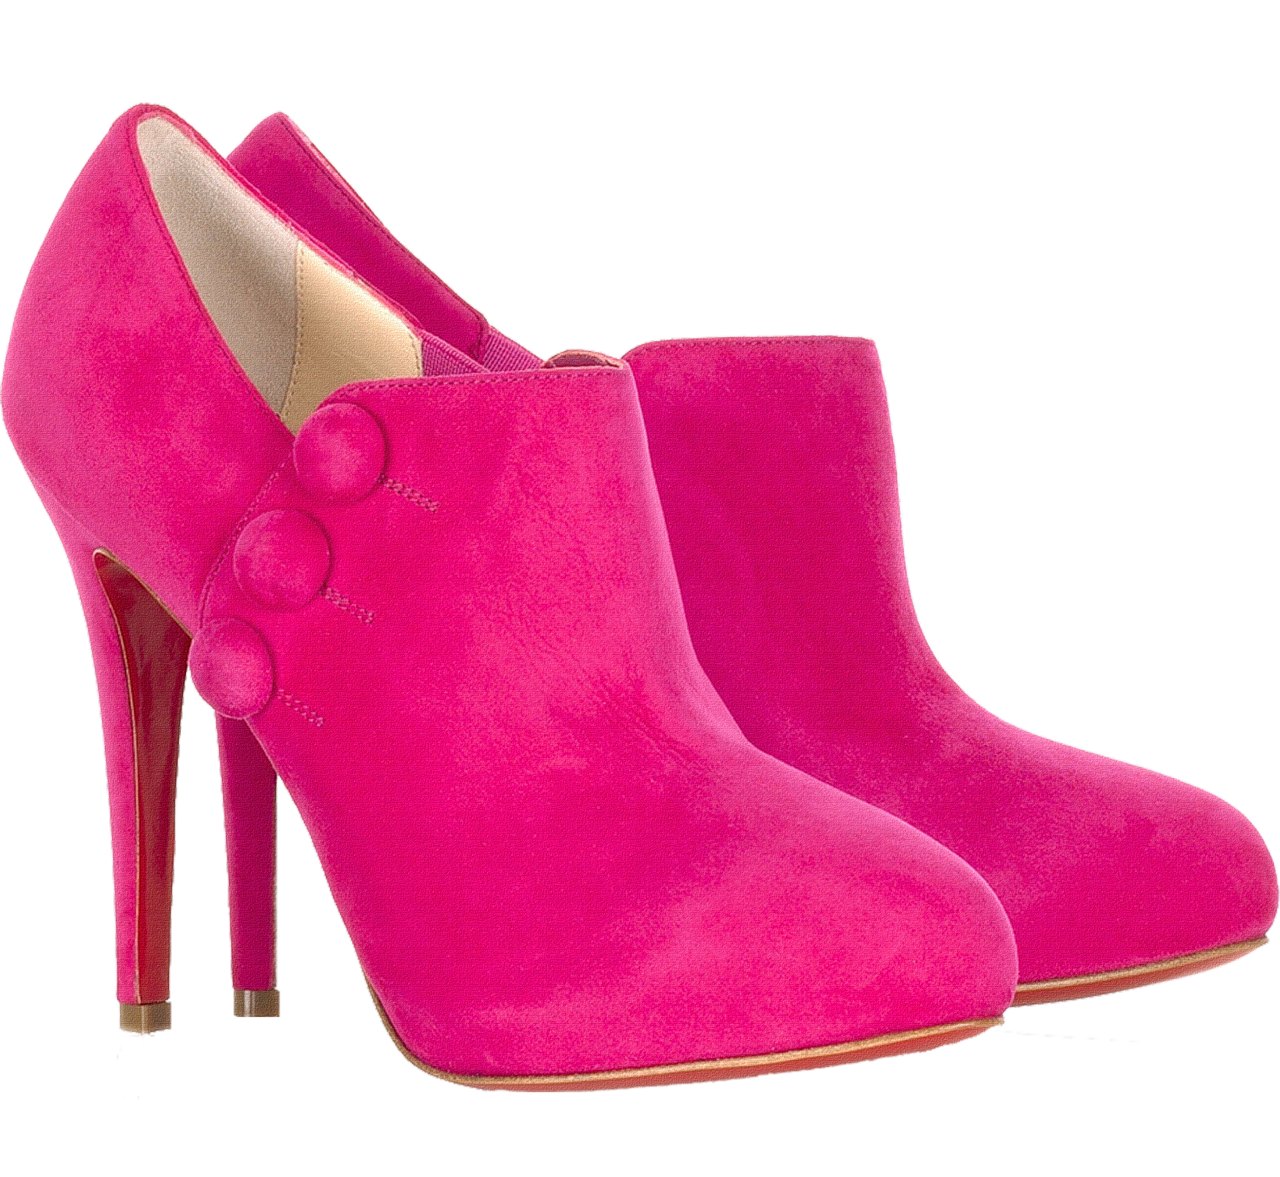 Sapatos femininos rosa